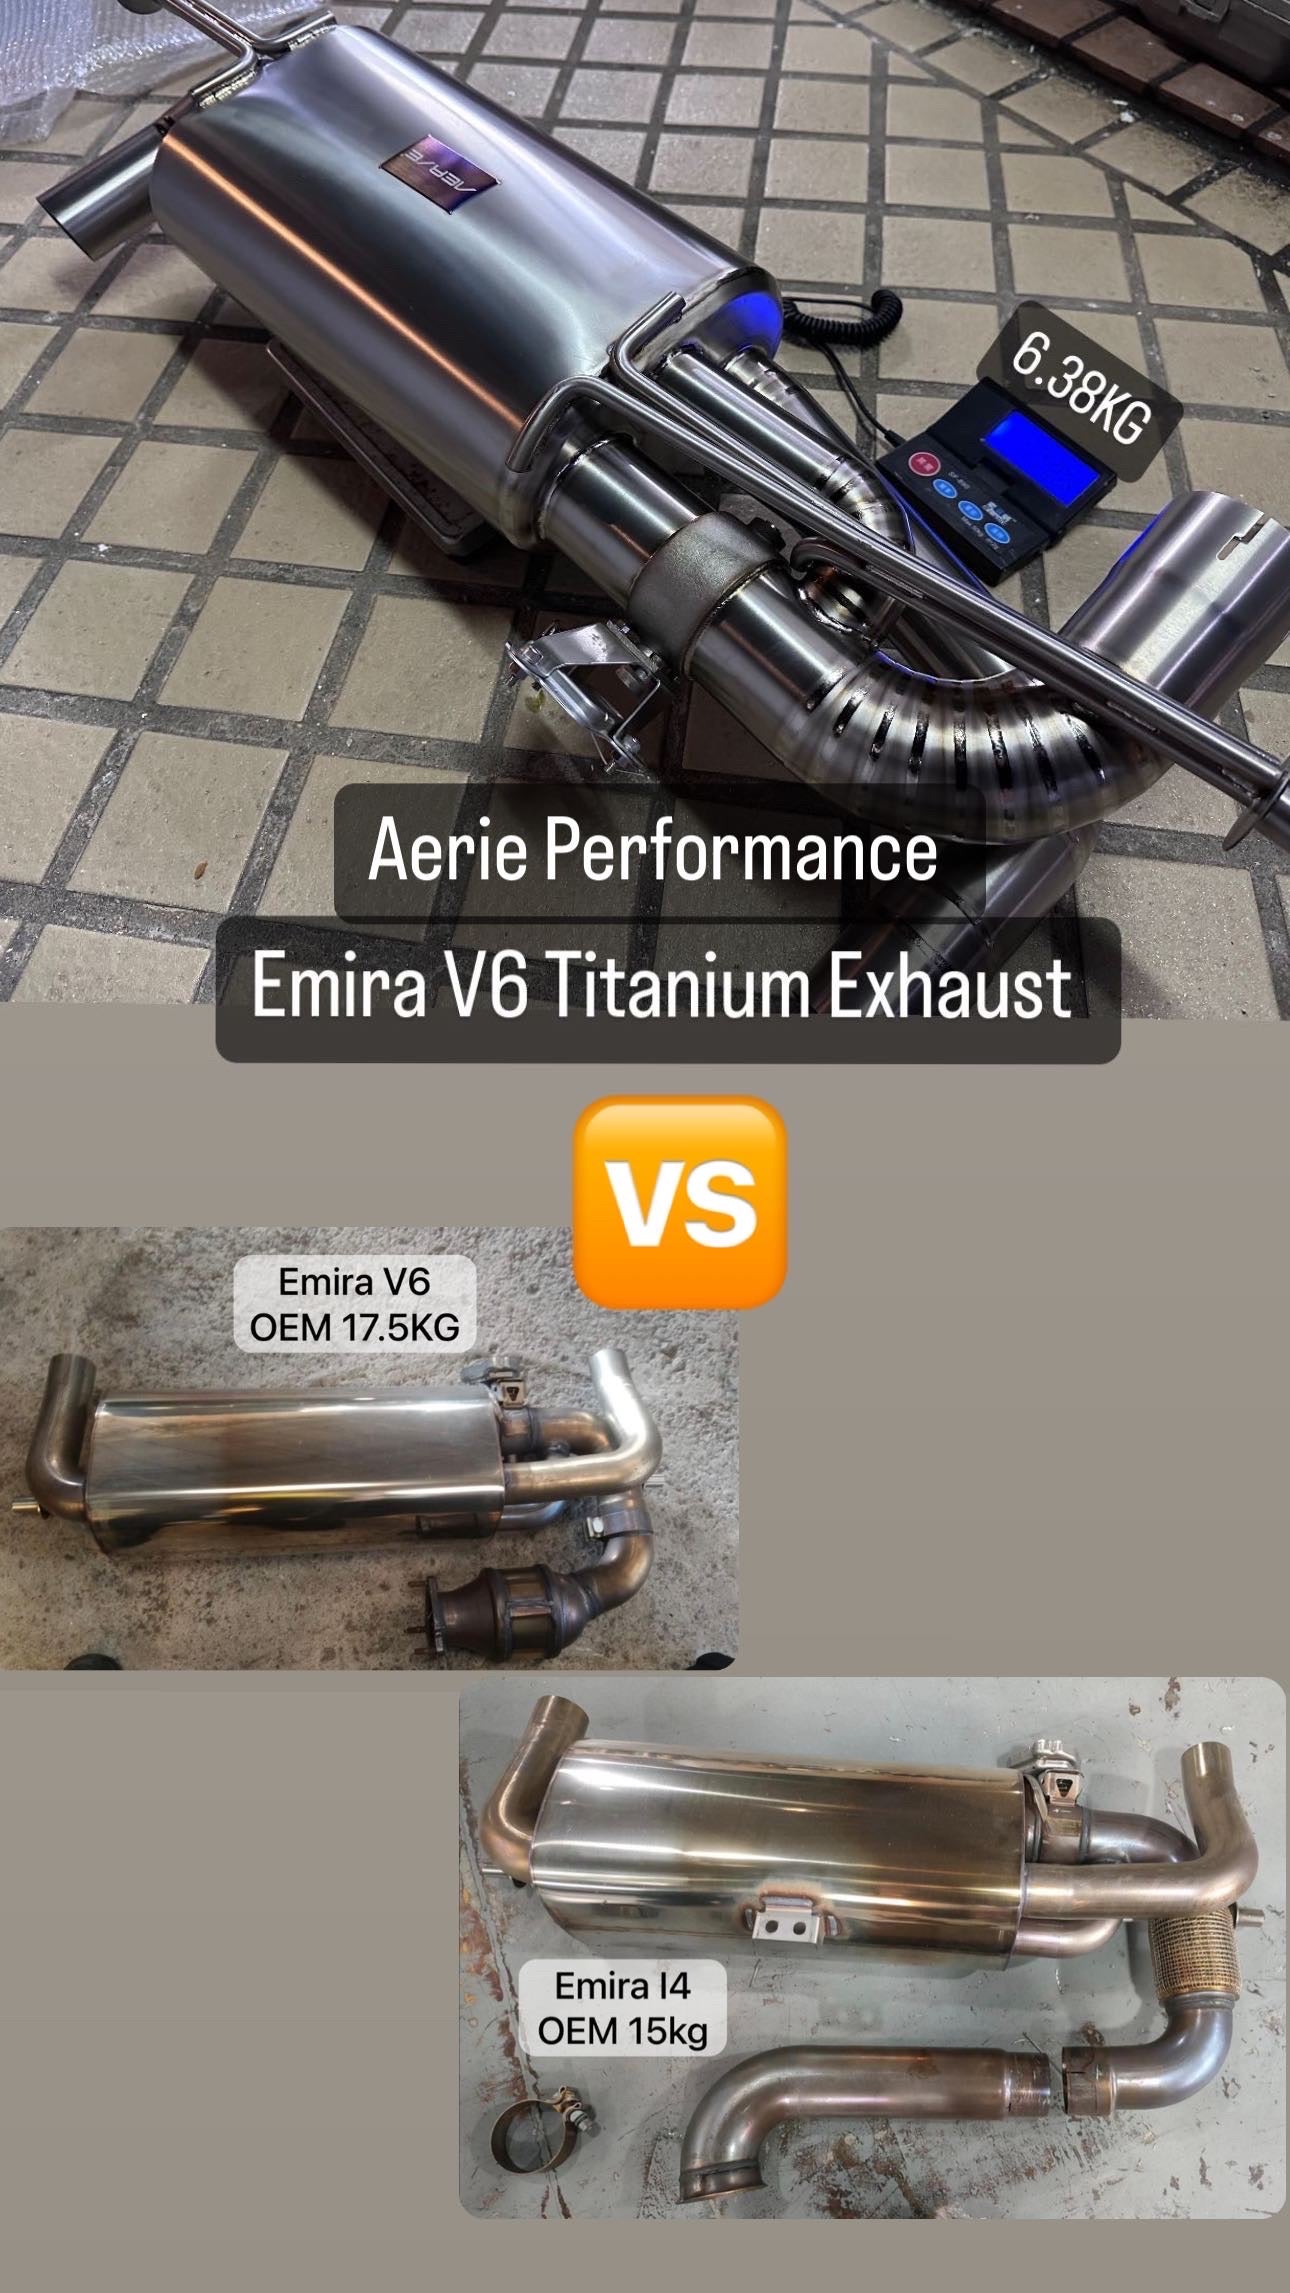 Emira V6 Titanium exhaust system by Aerie Performance